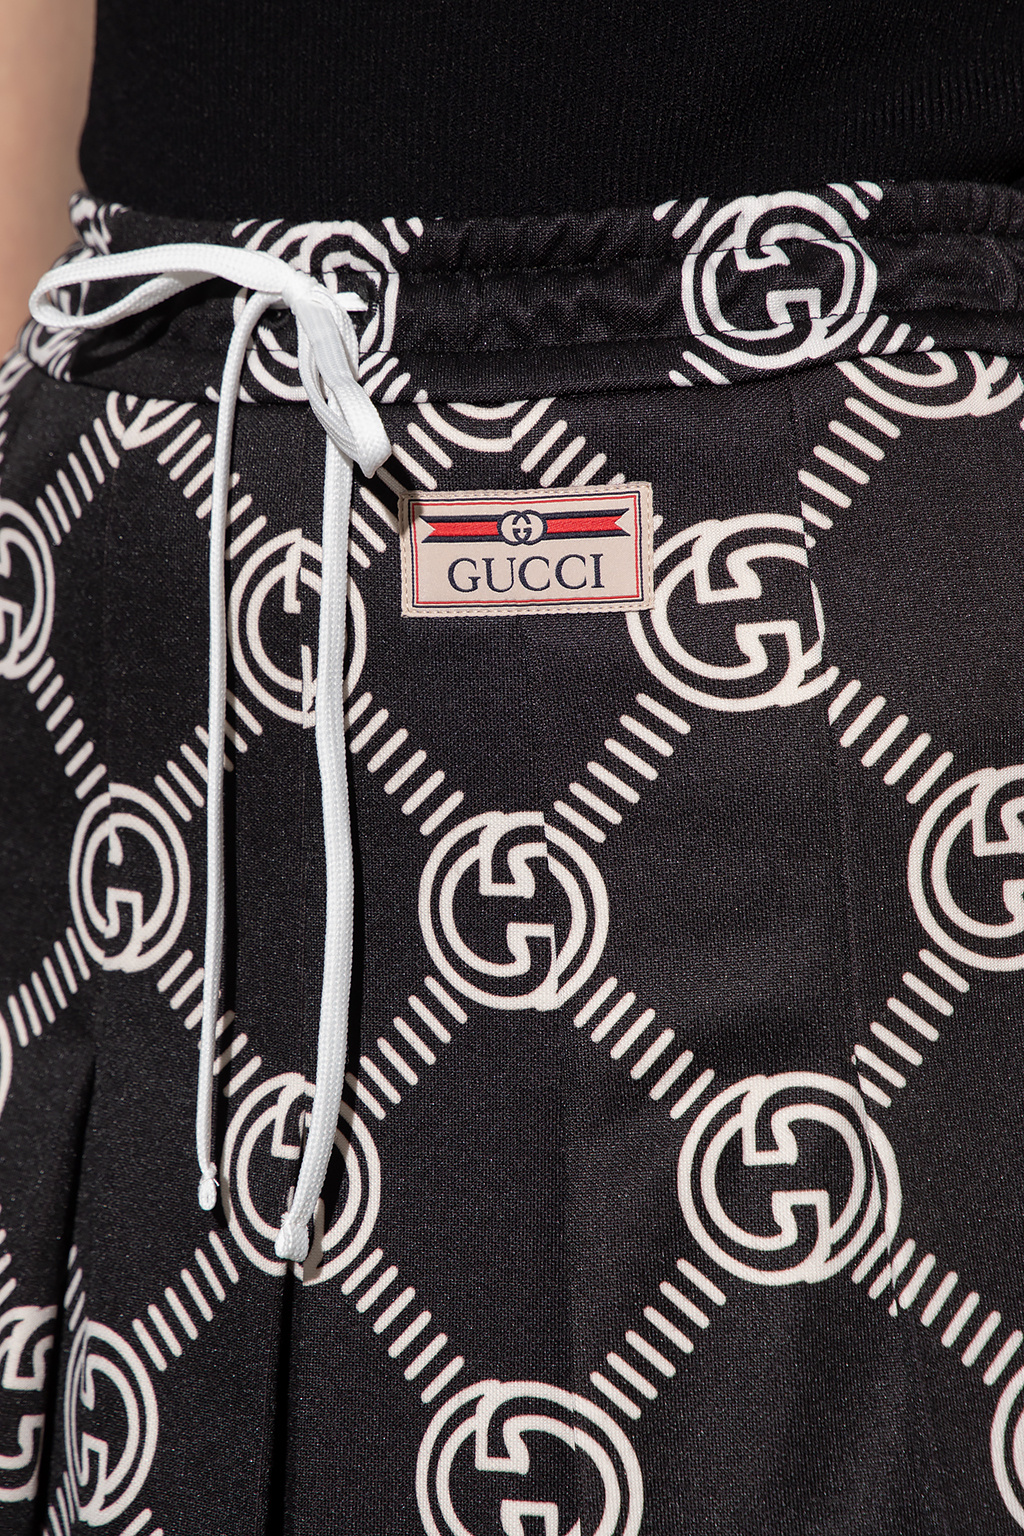 Gucci gucci vintage logo tshirt red black coco capitan